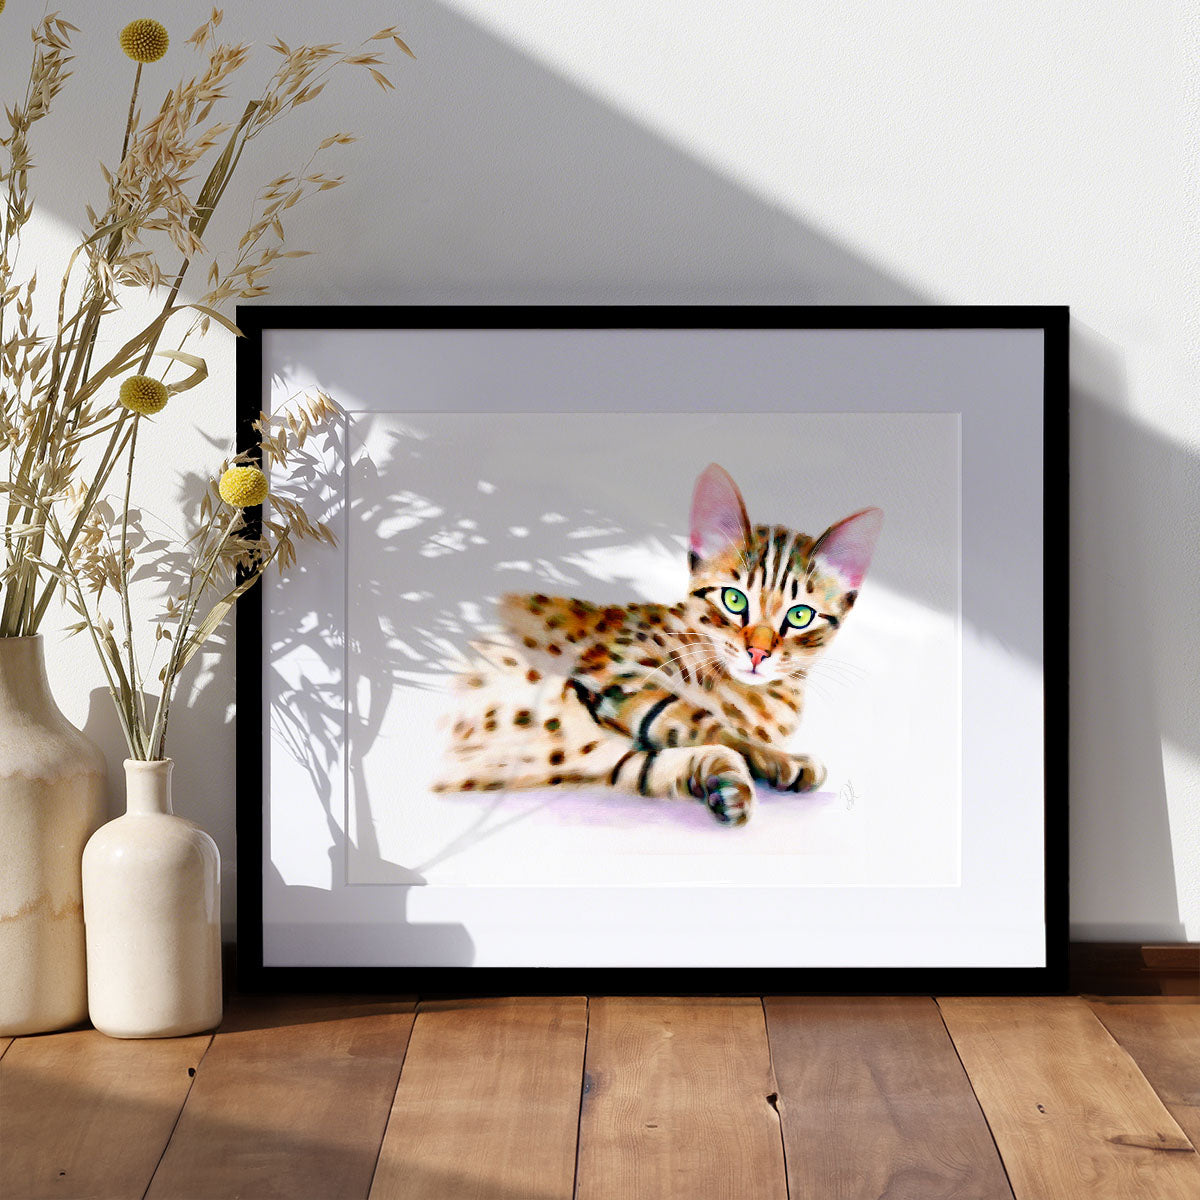 Bengal Kitten - Bengal Cat Print